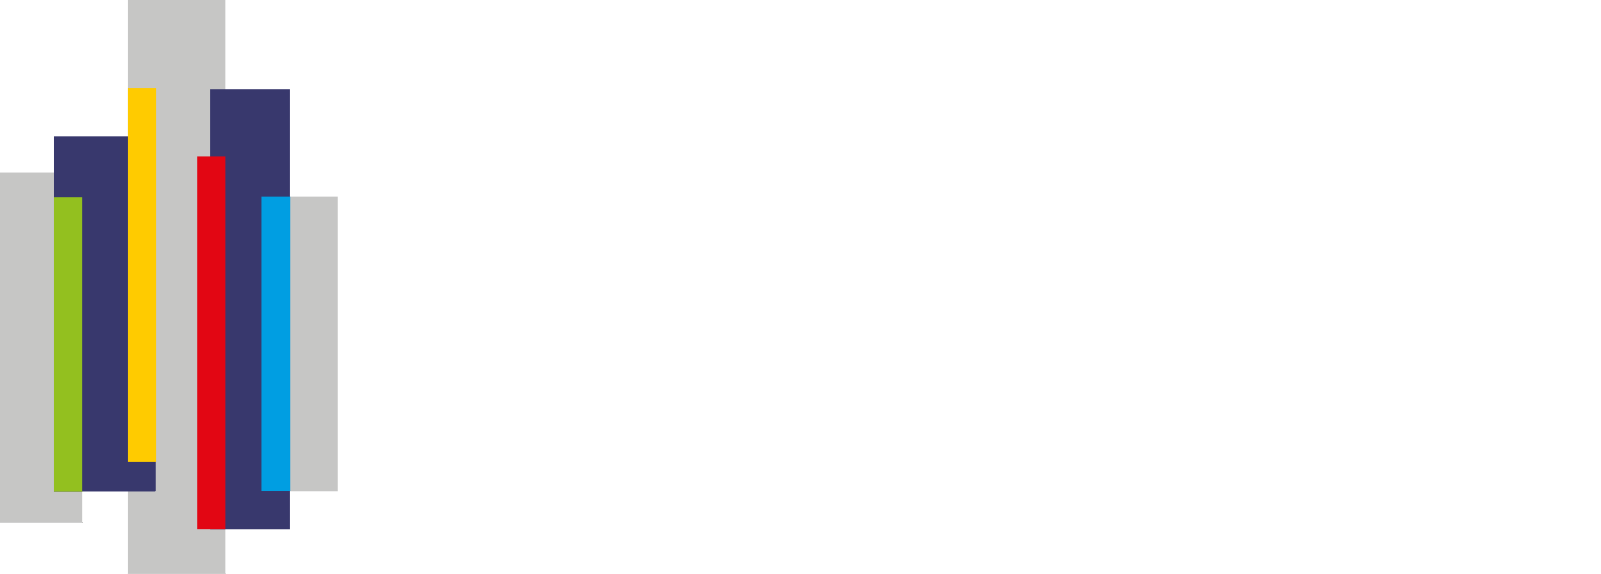 Energy Vault Logo groß für dunkle Hintergründe (transparentes PNG)